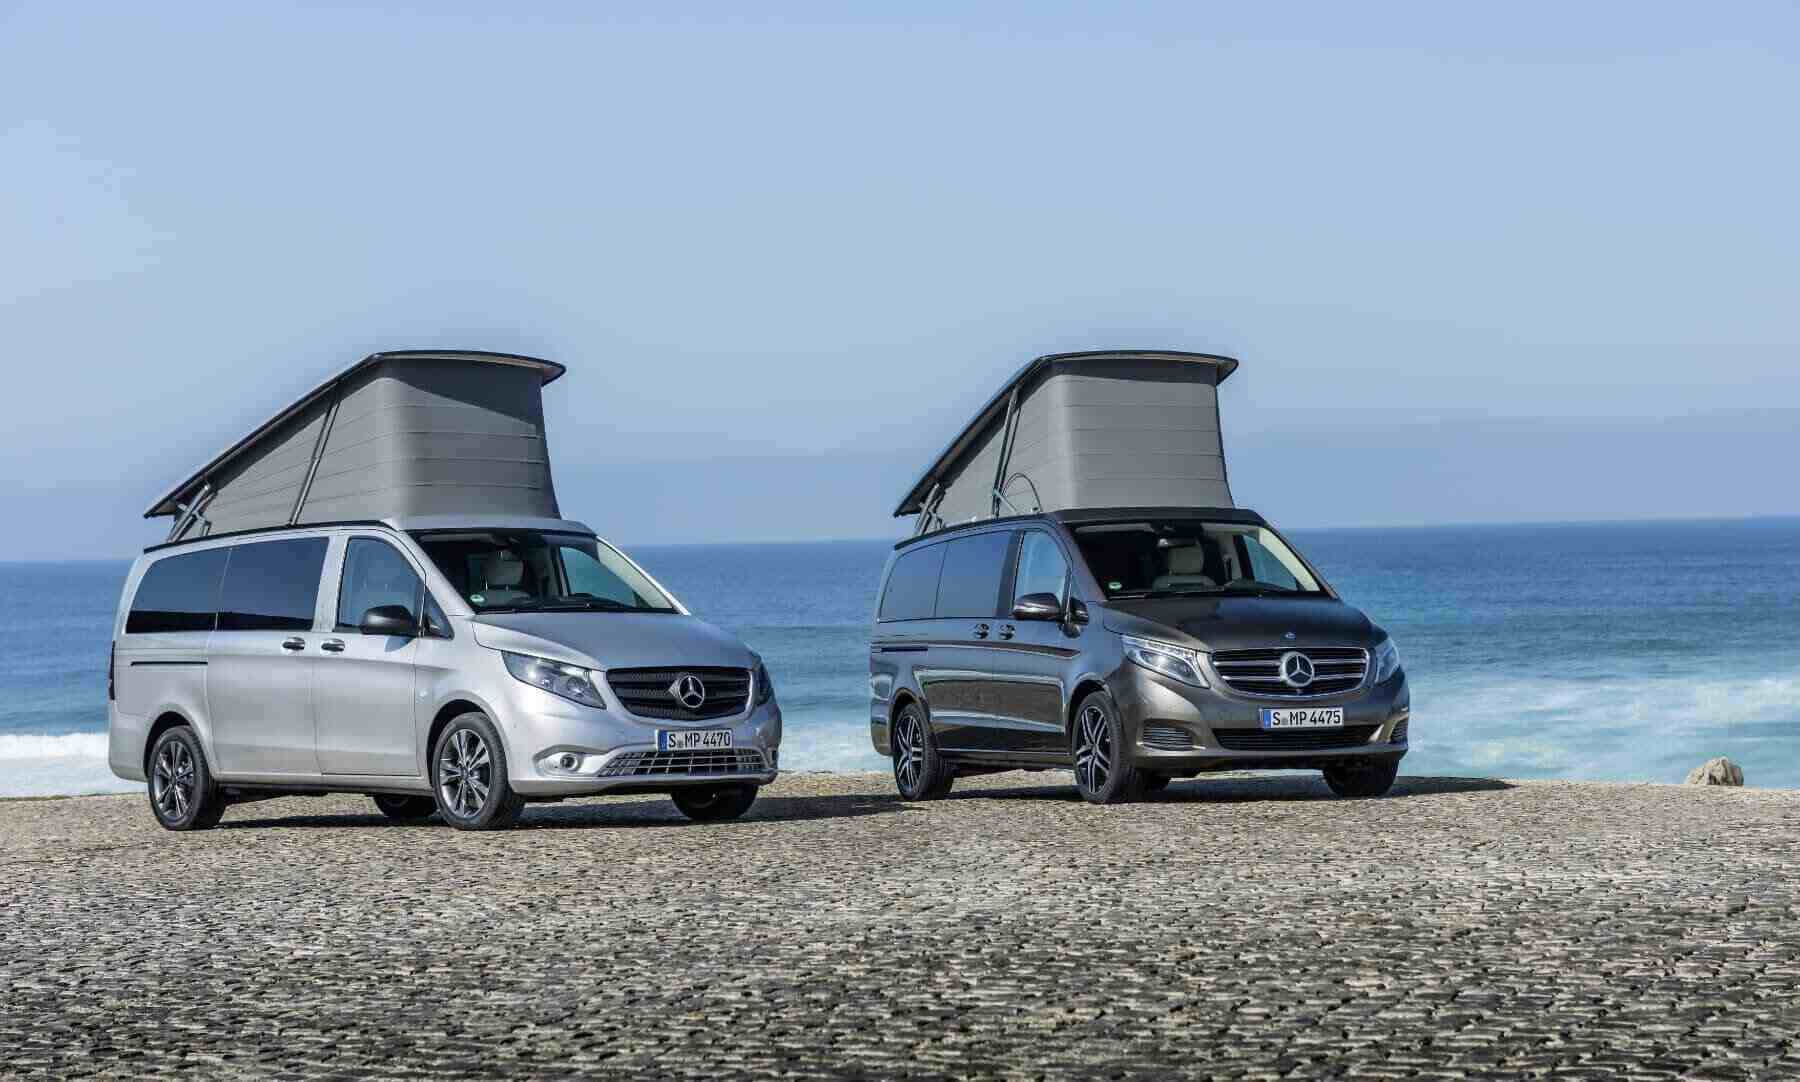 Dva Mercedes kombija na obali mora